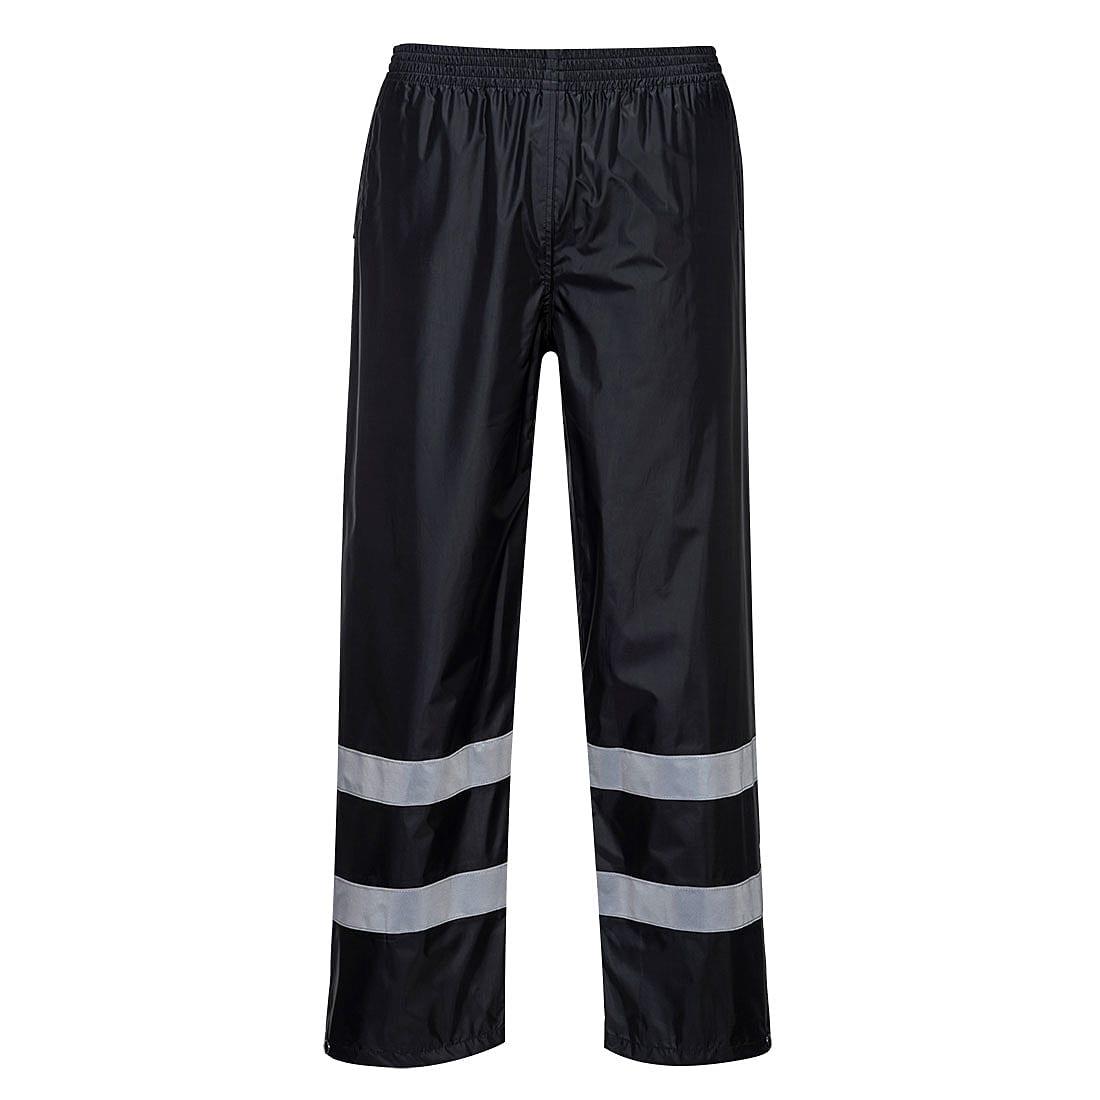 Portwest Classic Iona Rain Trousers in Black (Product Code: F441)